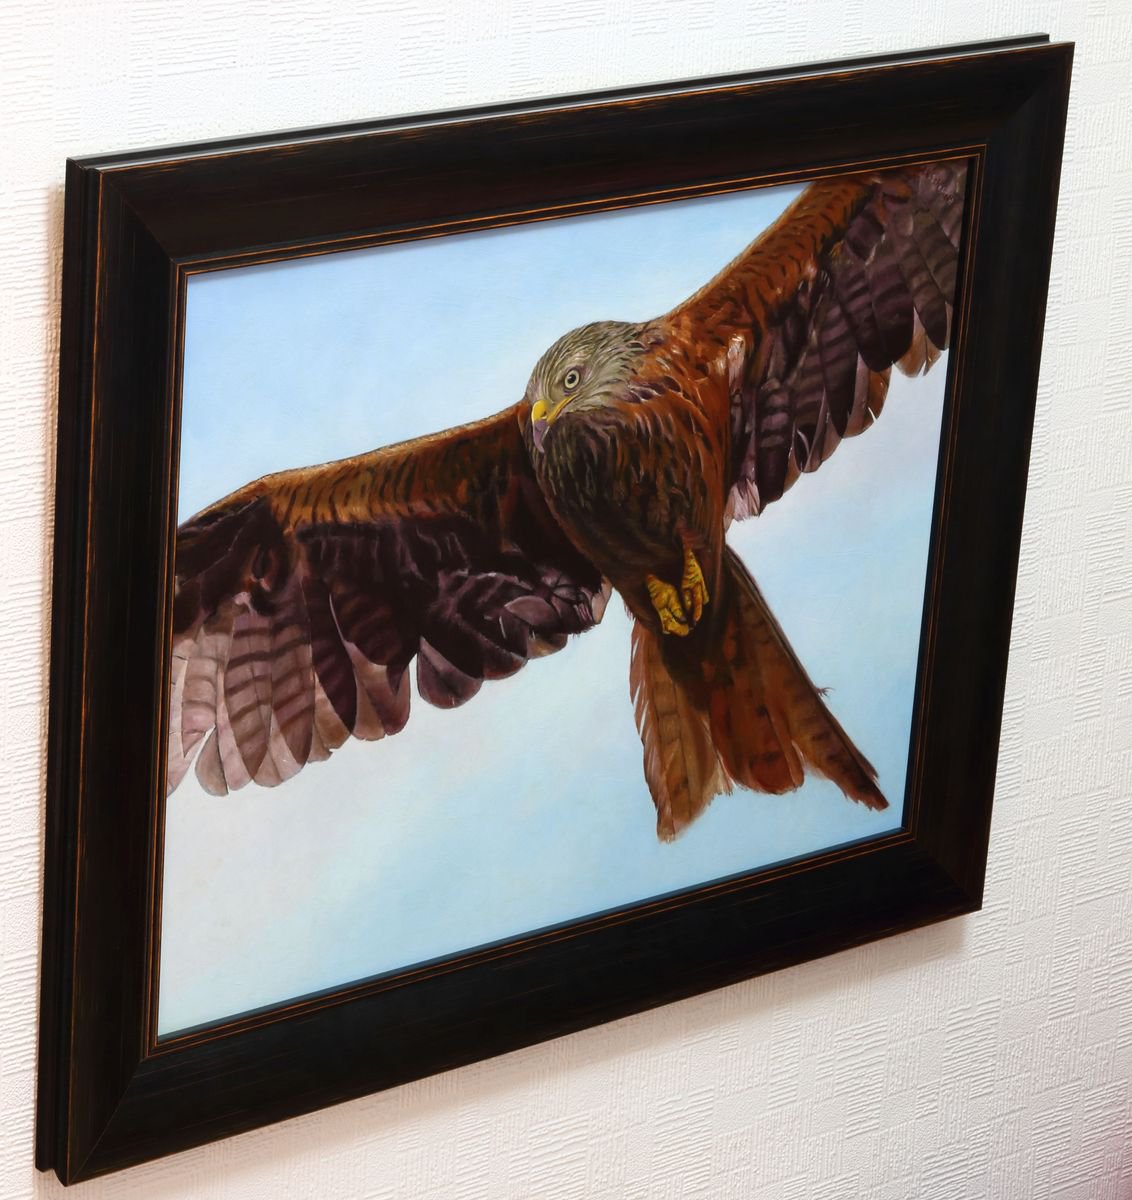 Red kite in flight by Andrew Schofield